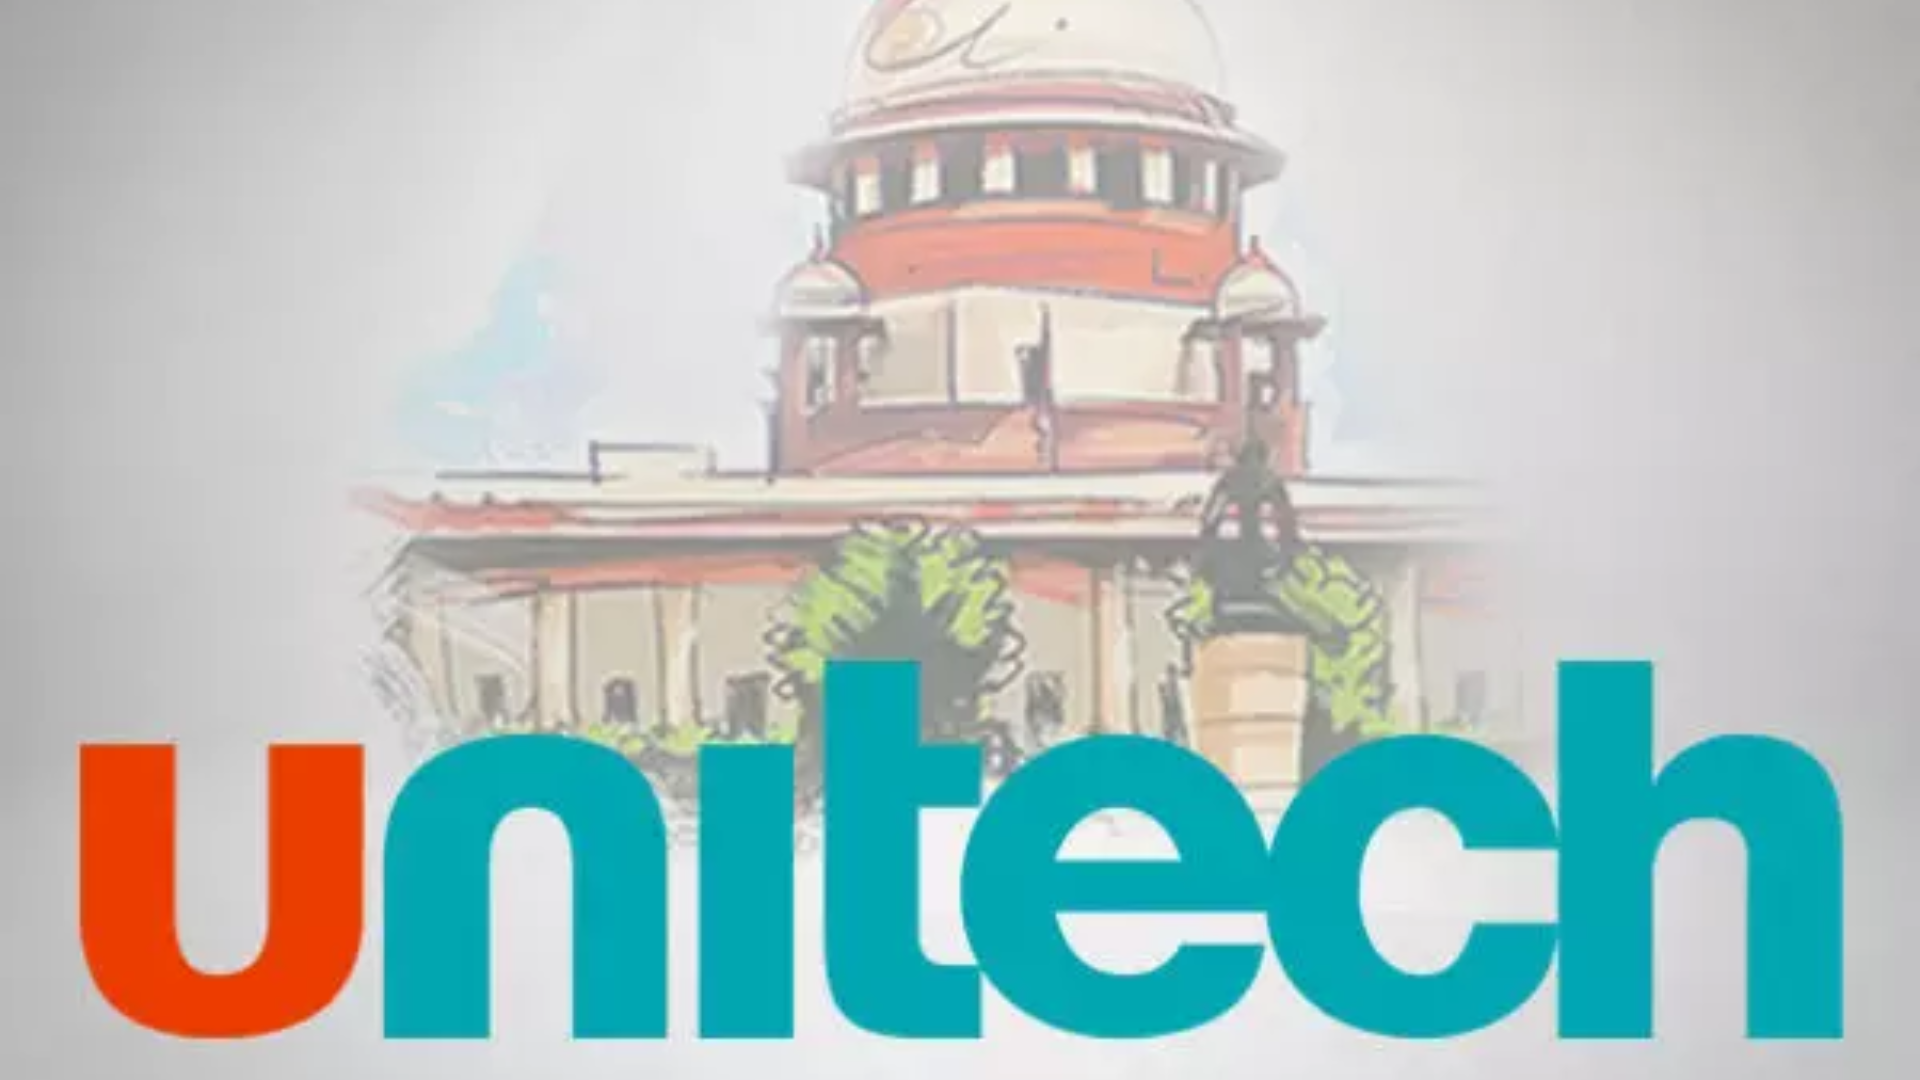 Unitech money laundering Case: Delhi HC Allows Upma Chandra To Travel to USA